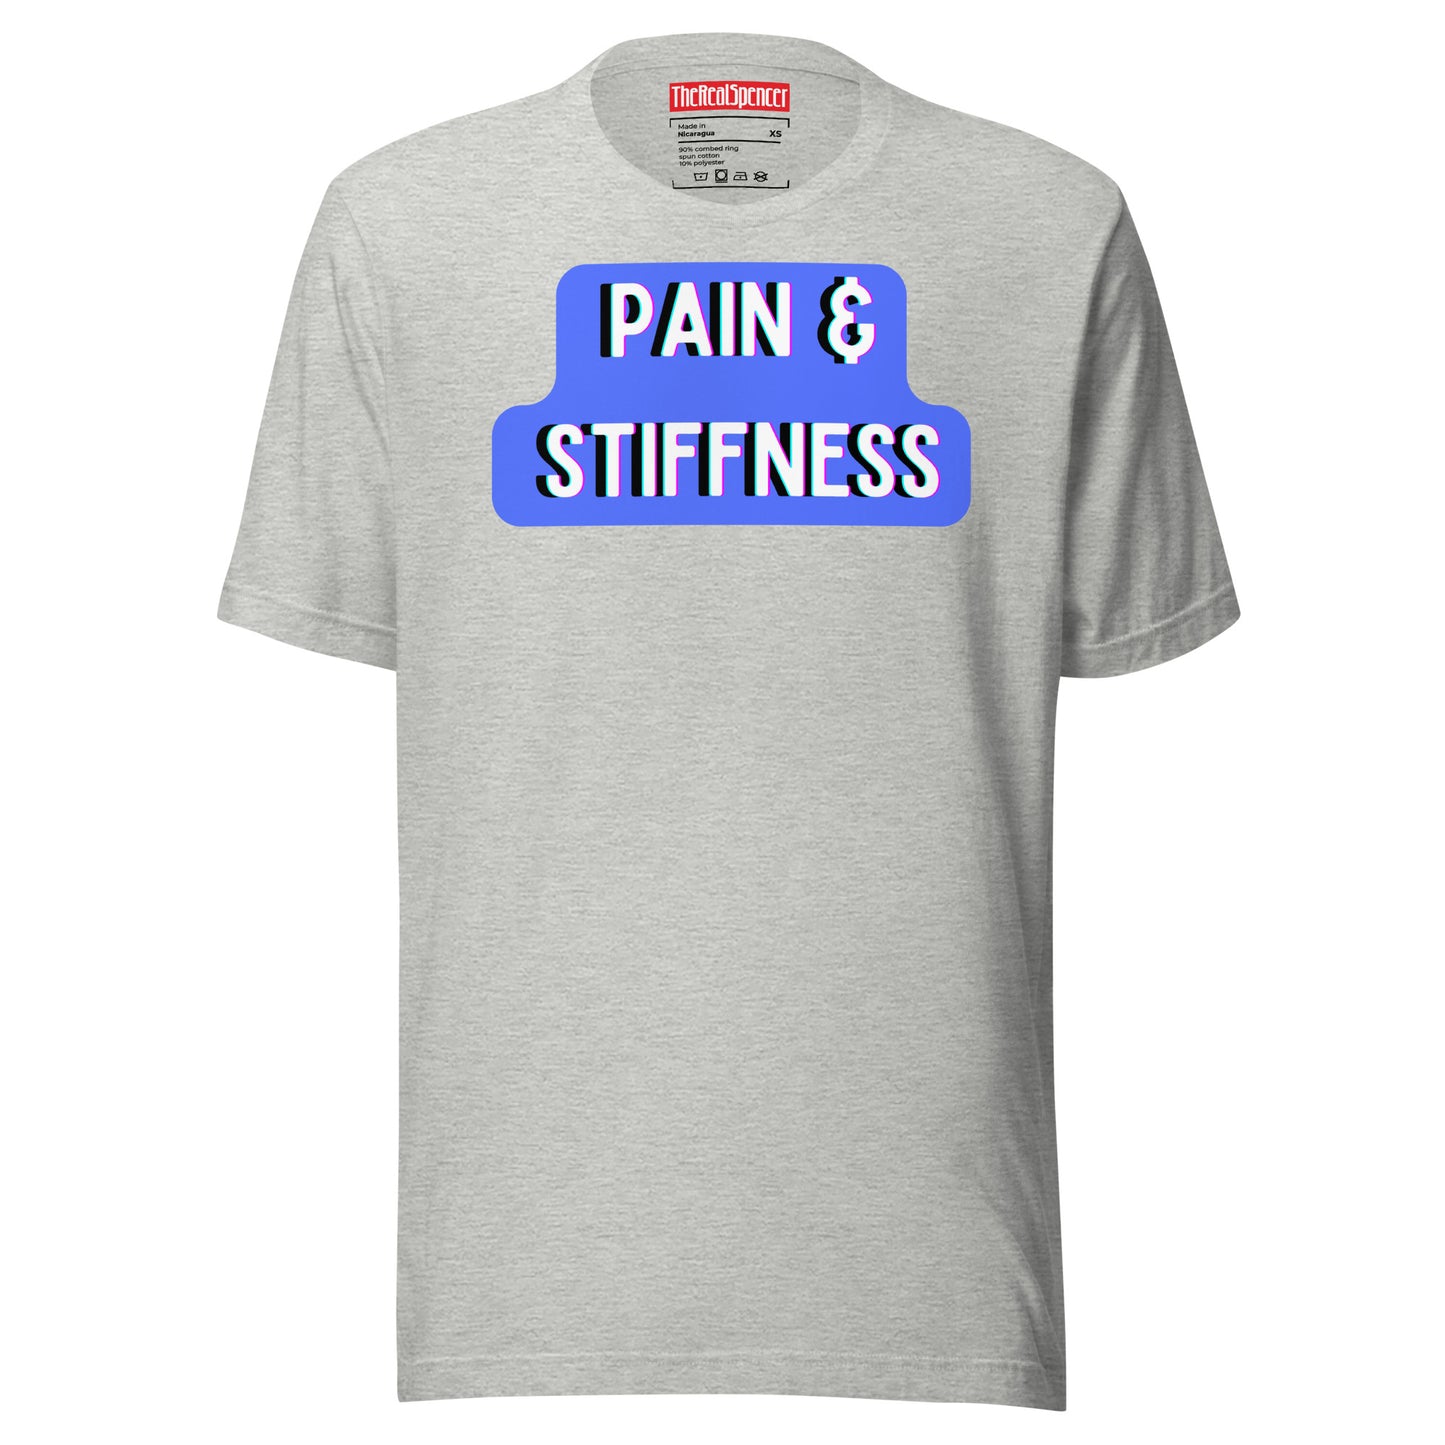 Pain and Stiffness T-Shirt